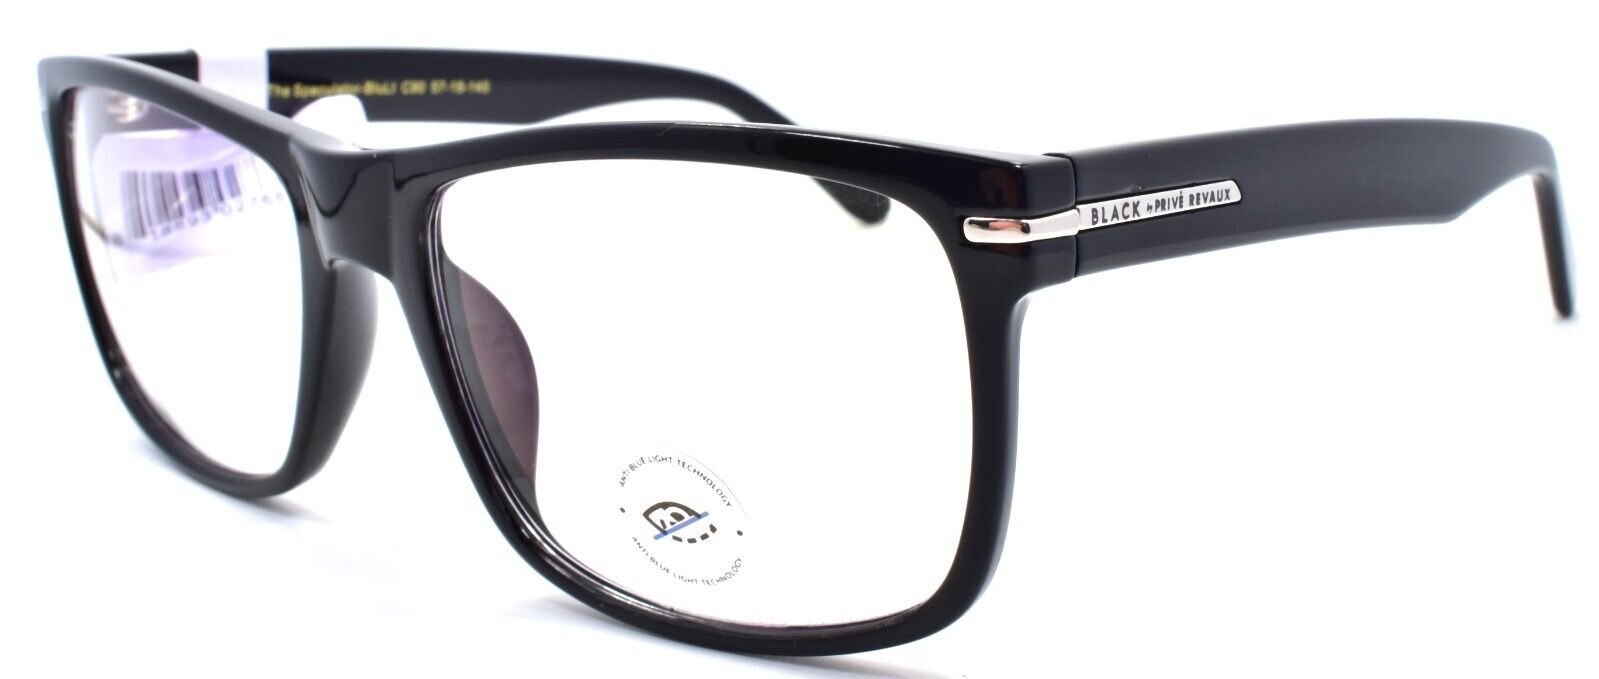 1-Prive Revaux The Speculator Eyeglasses Blue Light Blocking RX-ready Black-818893027680-IKSpecs